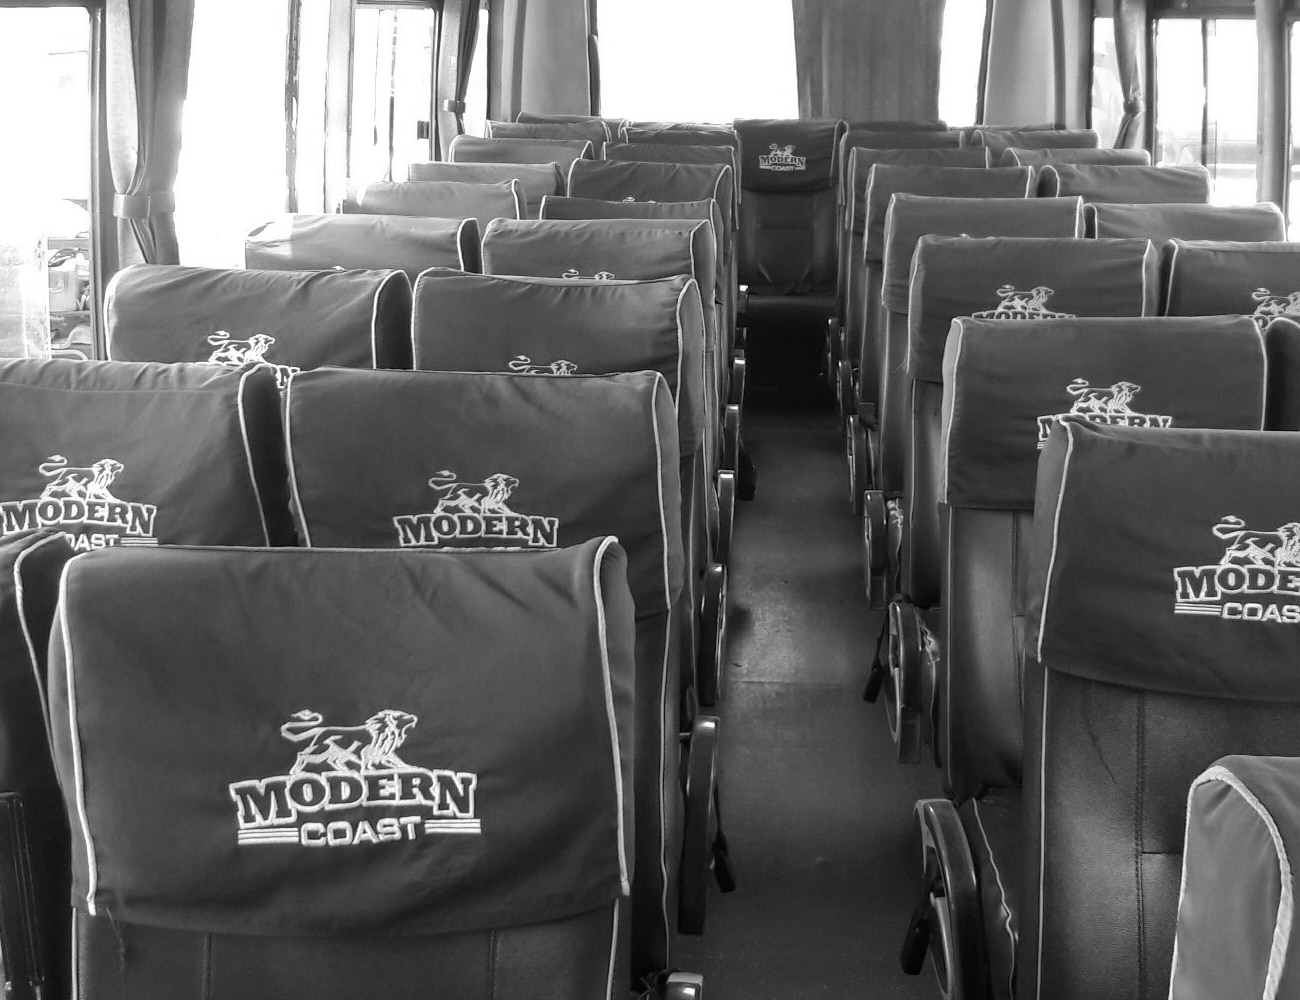 Modern Coast Bus Seats